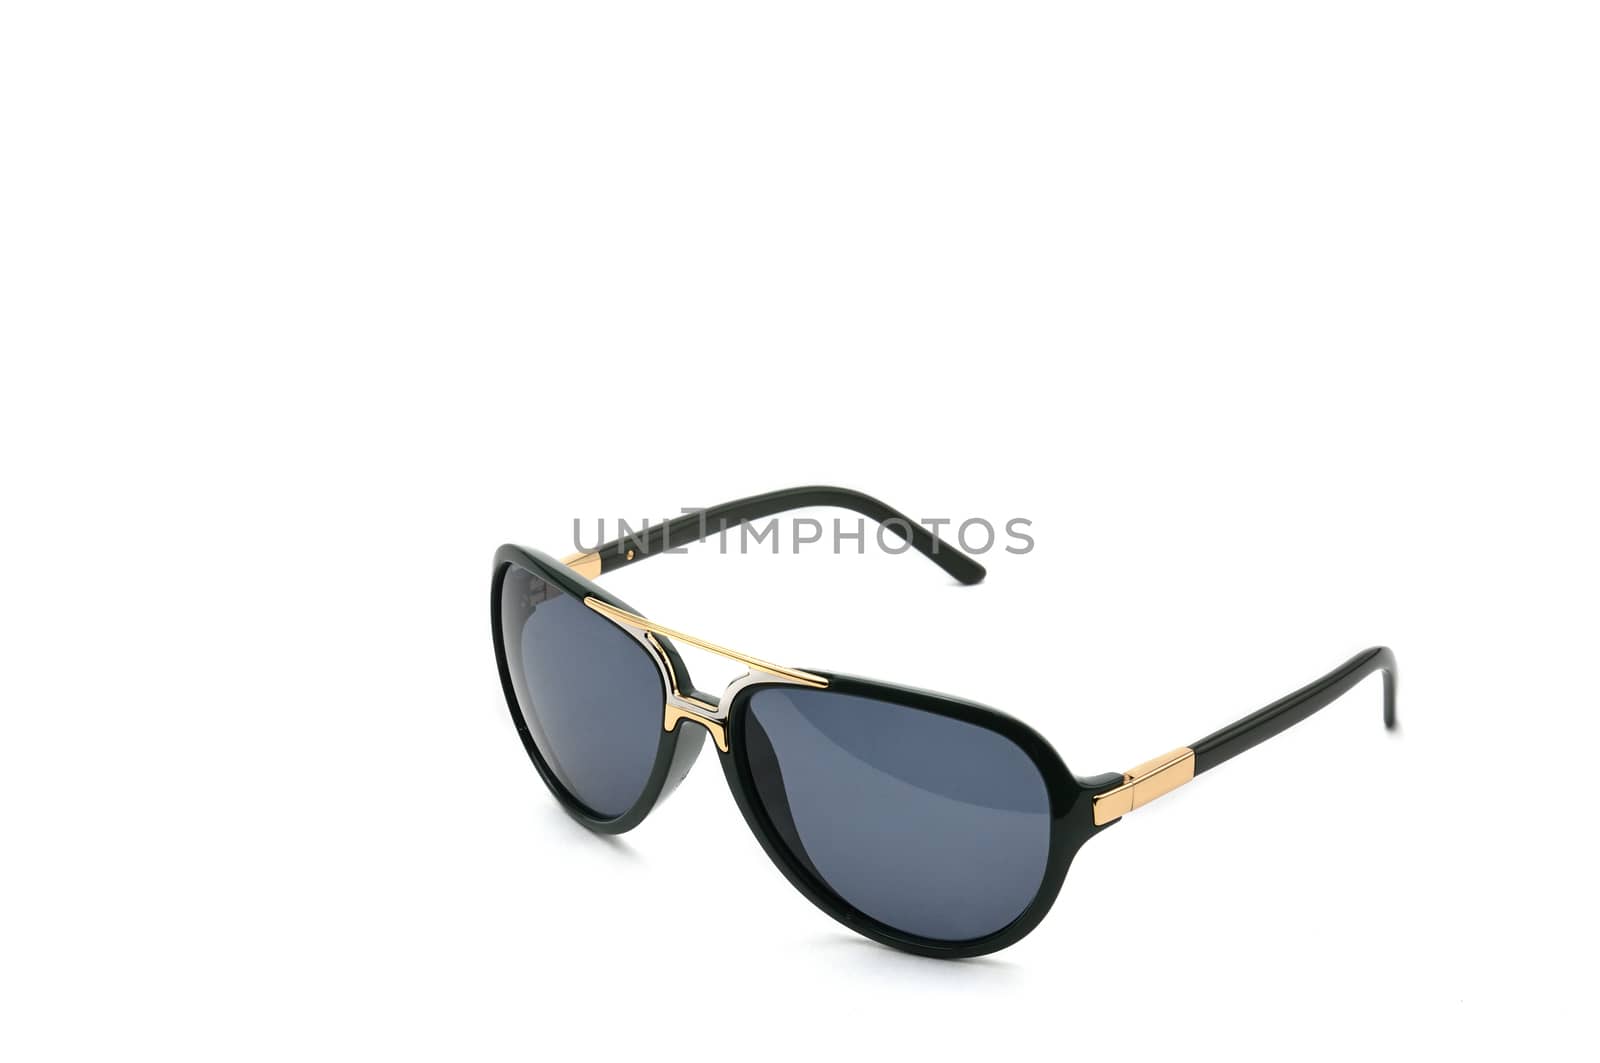 Sunglasses on white isolated background
